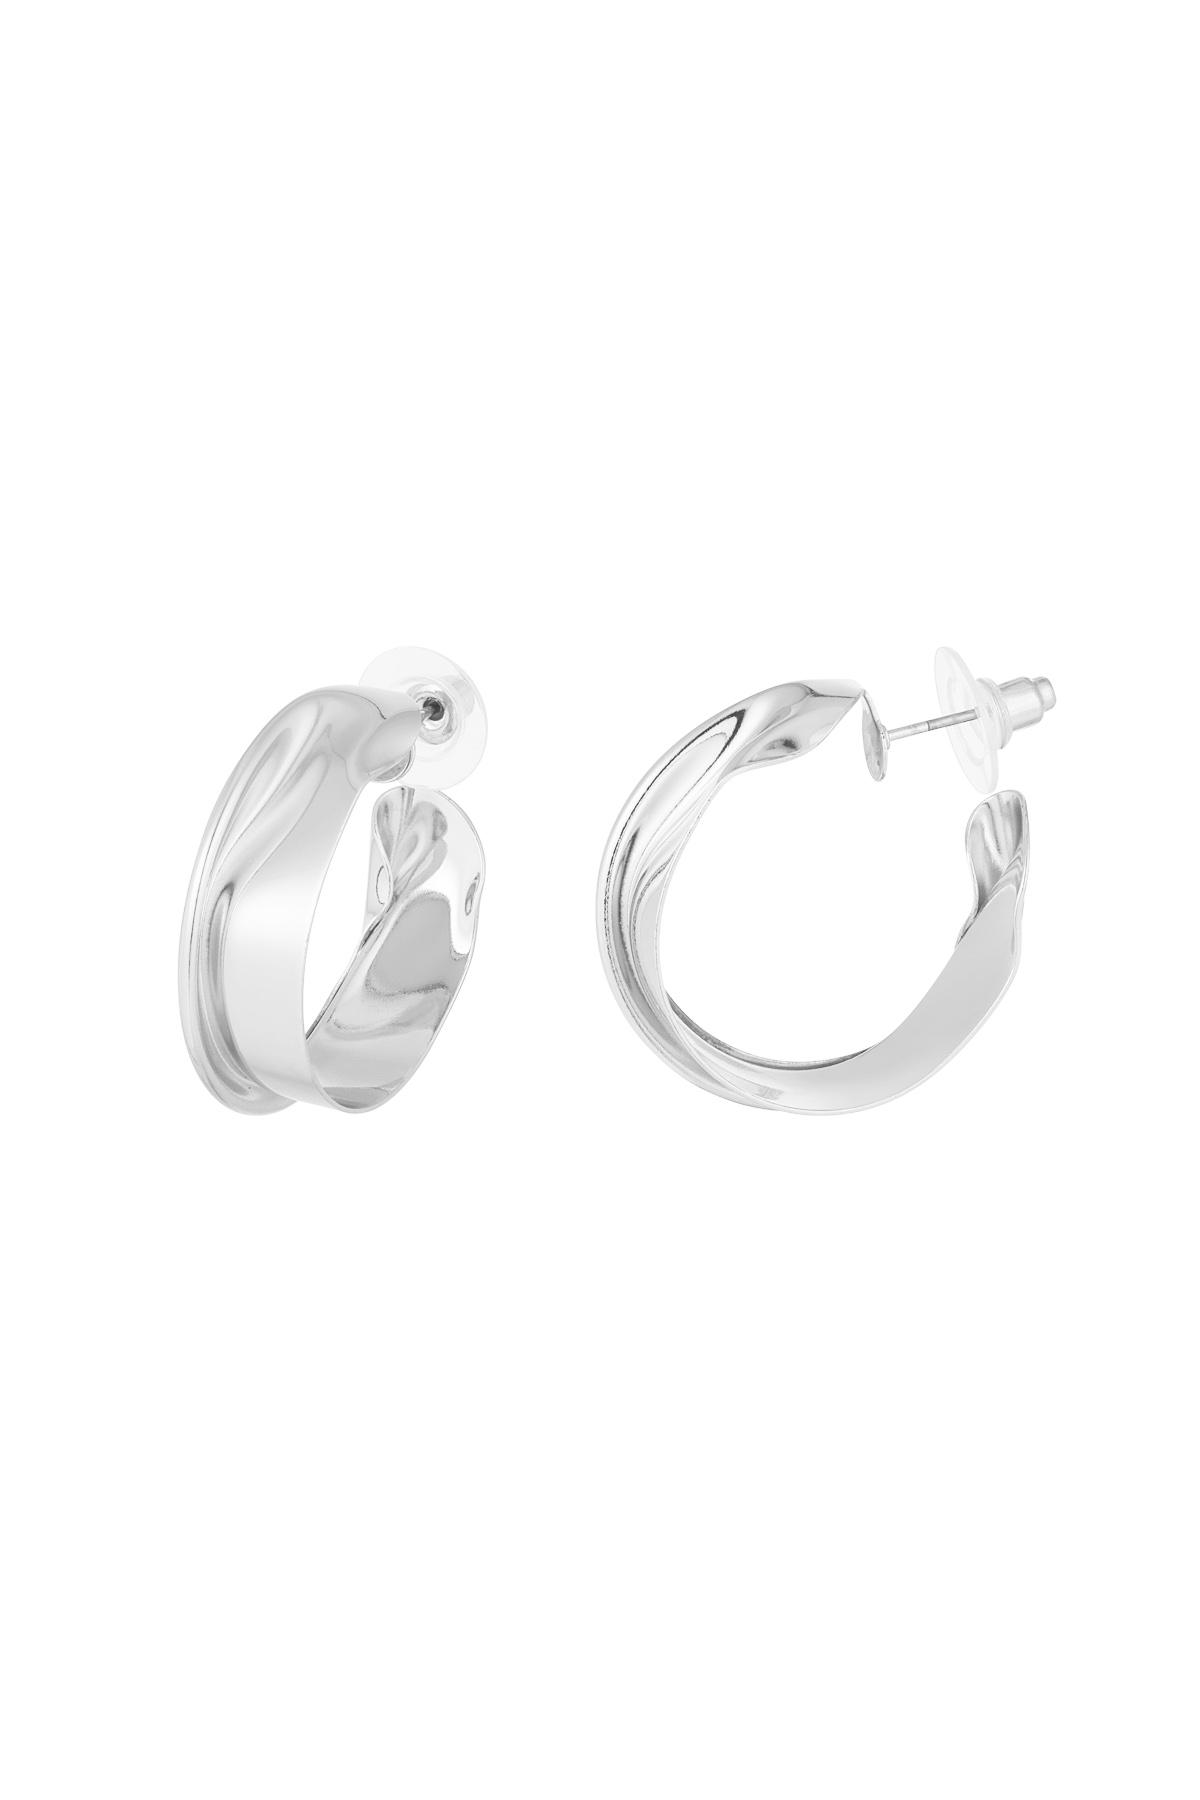 Earrings aesthetic round - silver